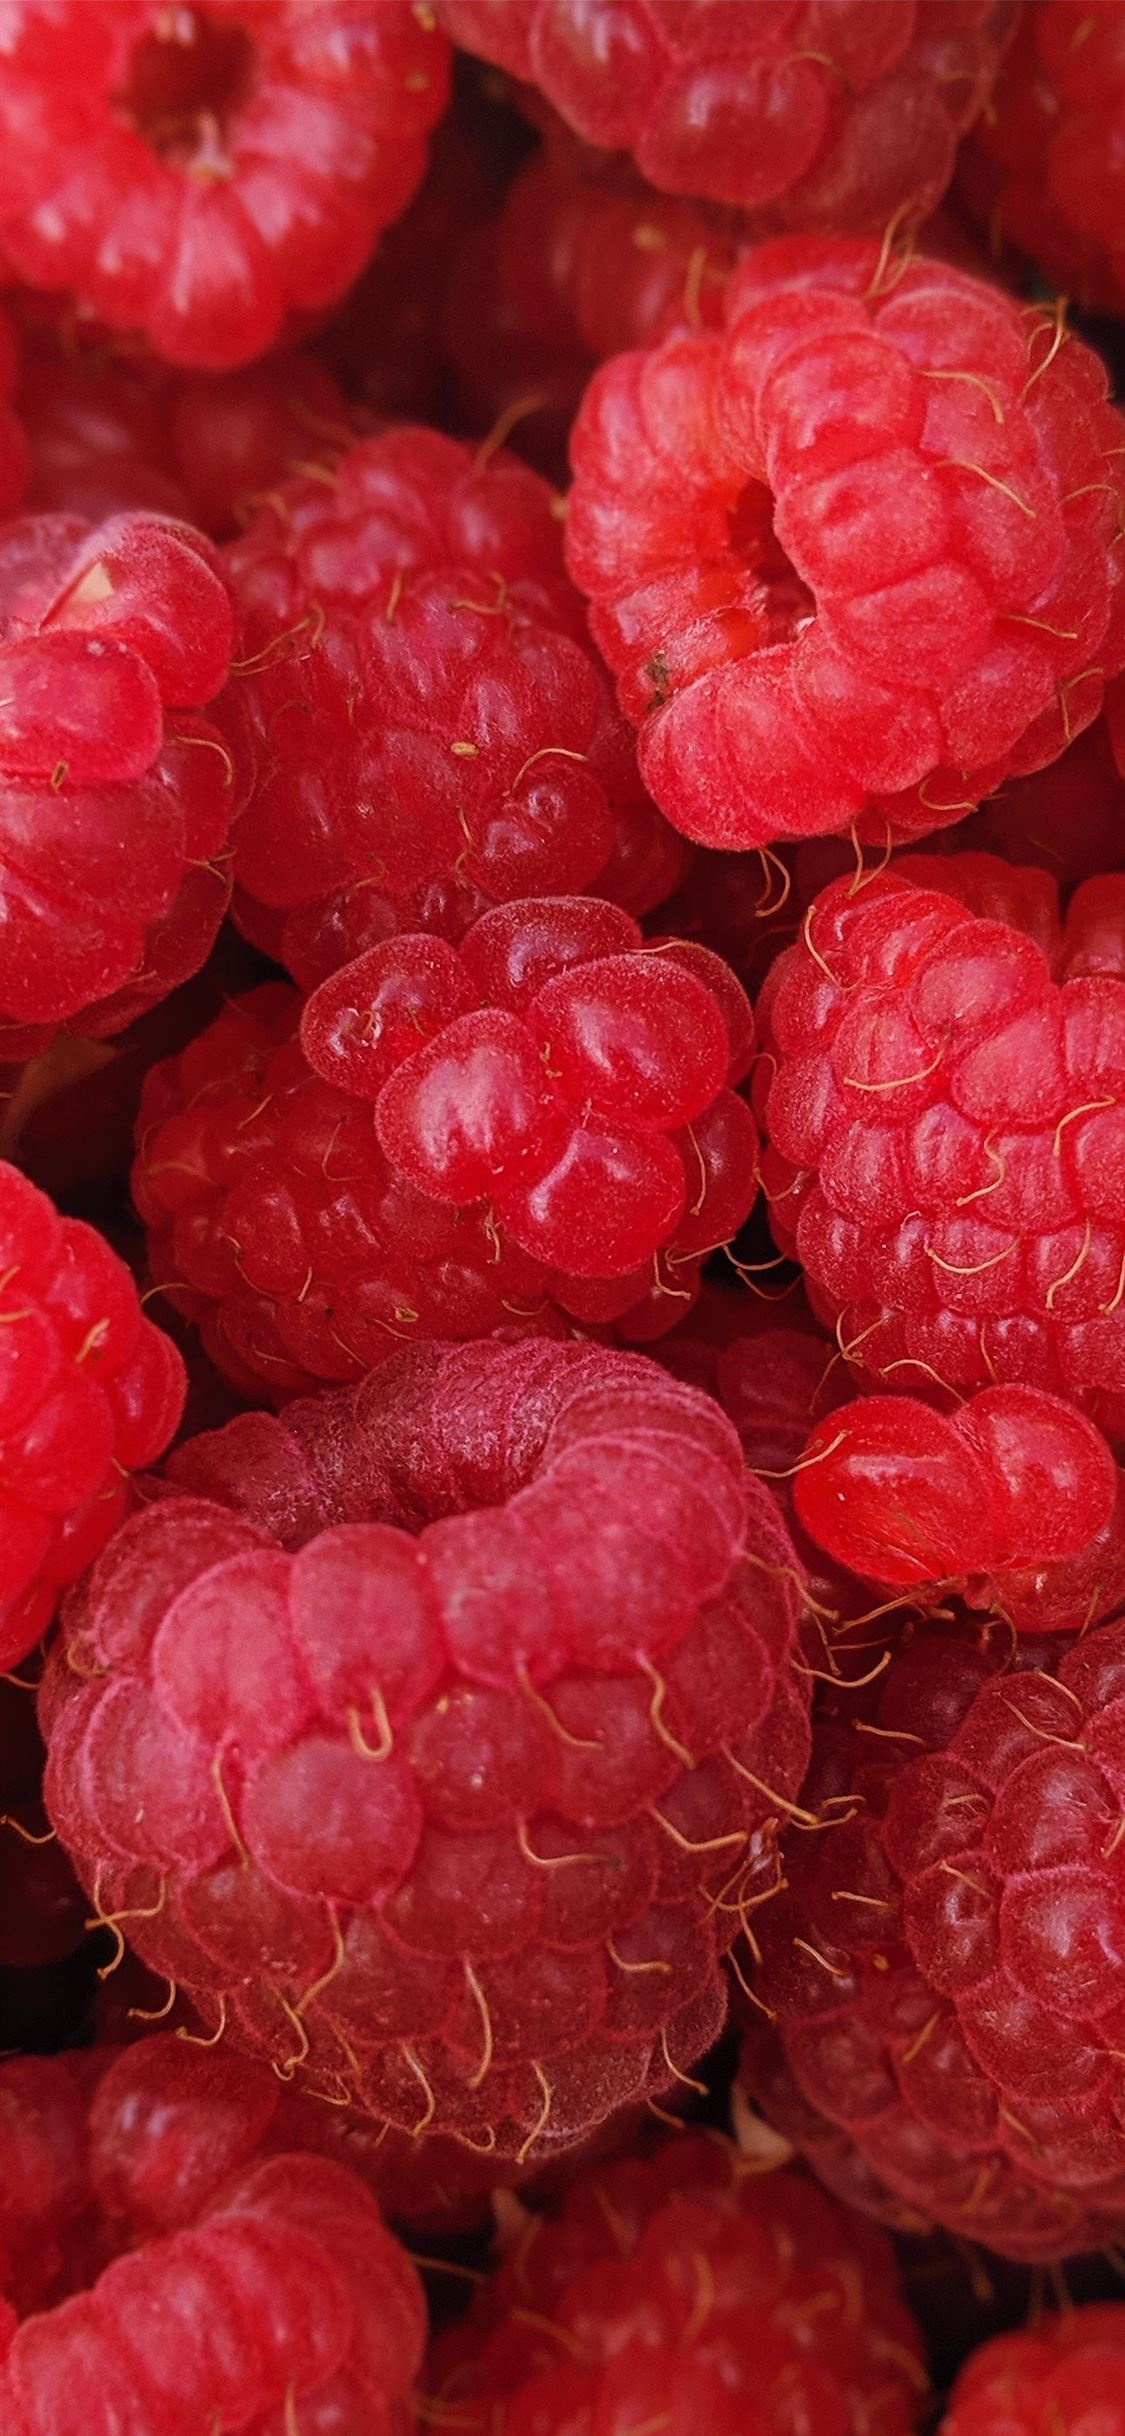 macro photography of raspberry fruits iPhone wallpaper 